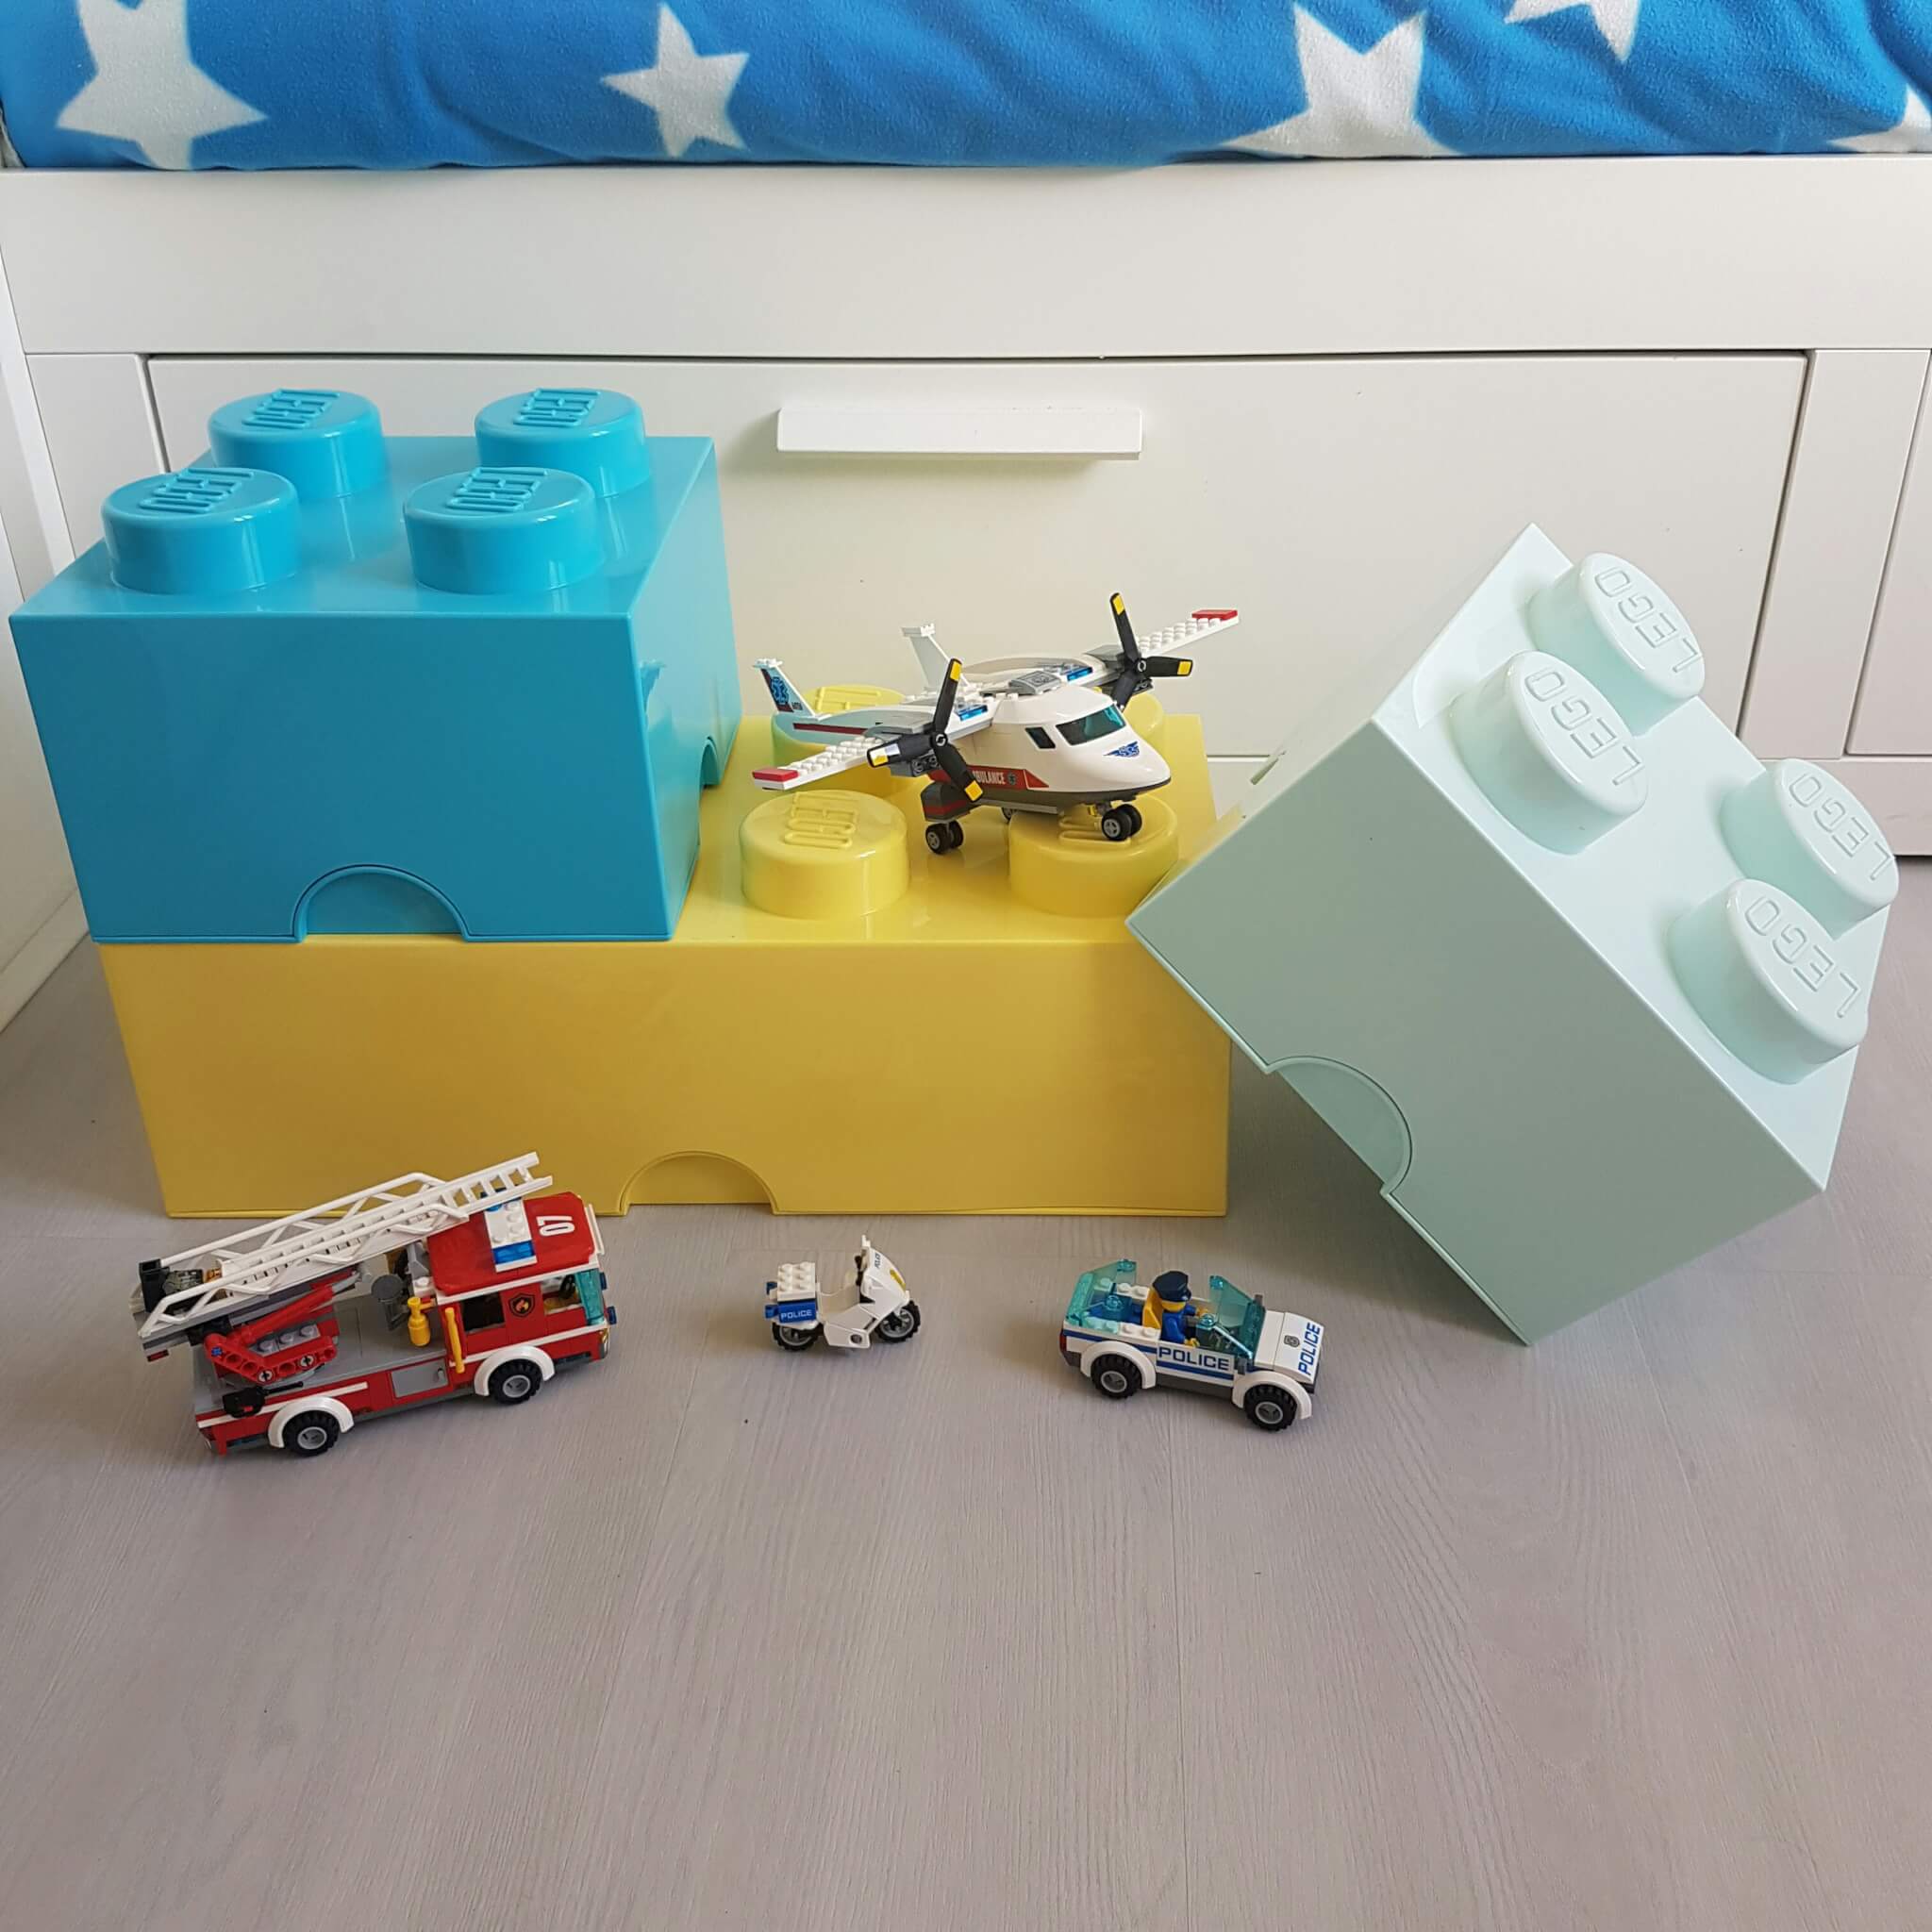 LEGO / opbergbox / opberglade / speeltafel Leuk met kids